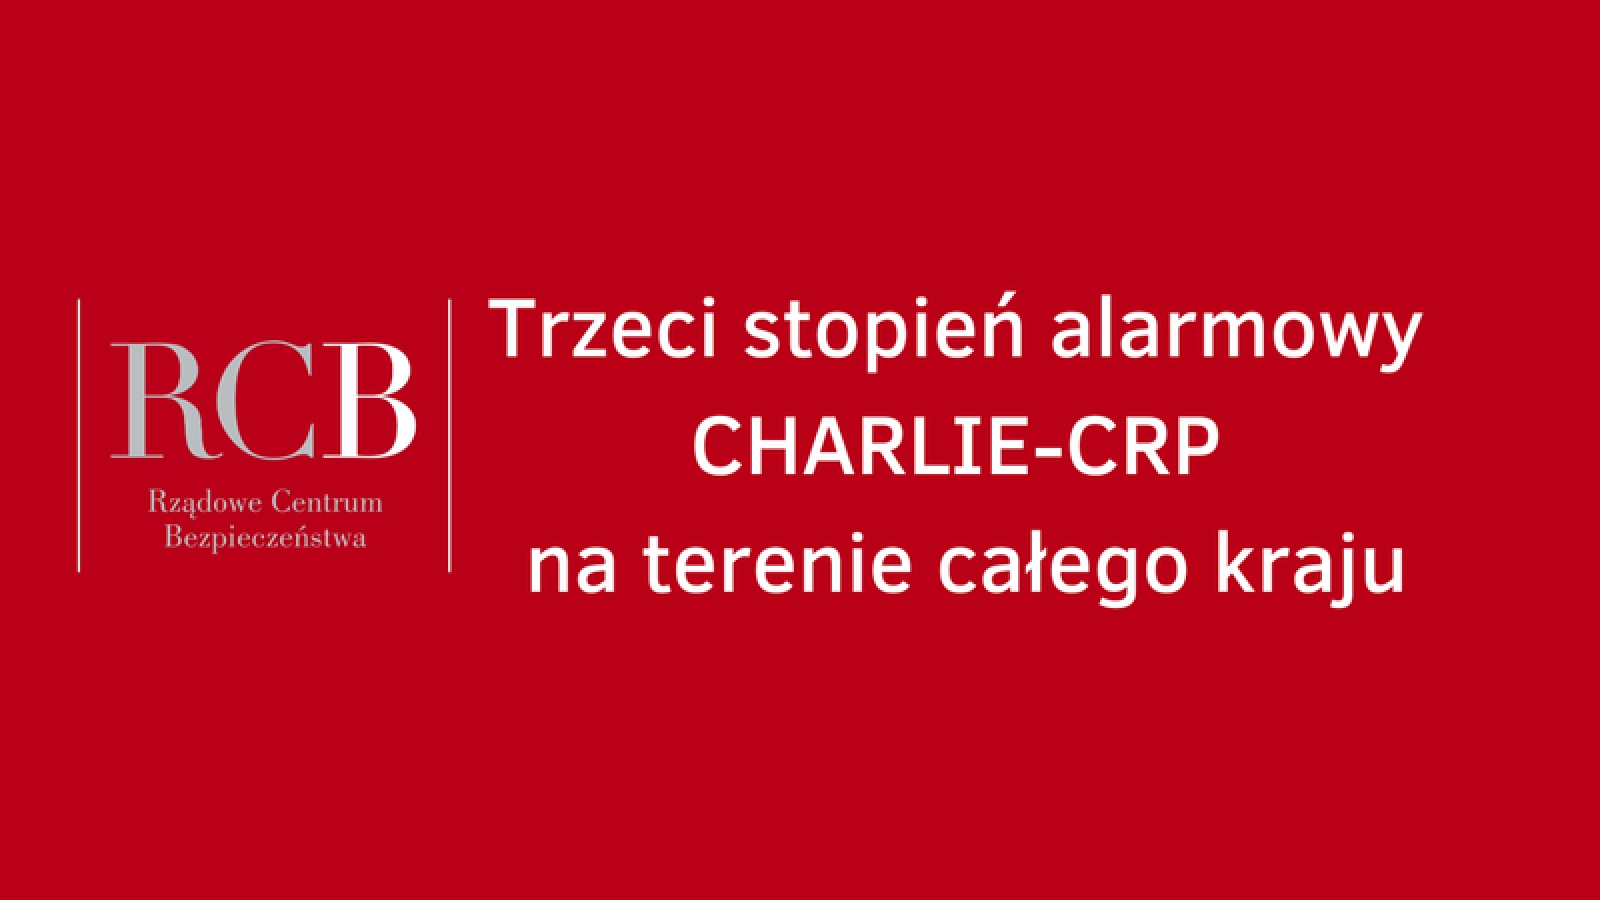 ALARM CHARLIE-CRP